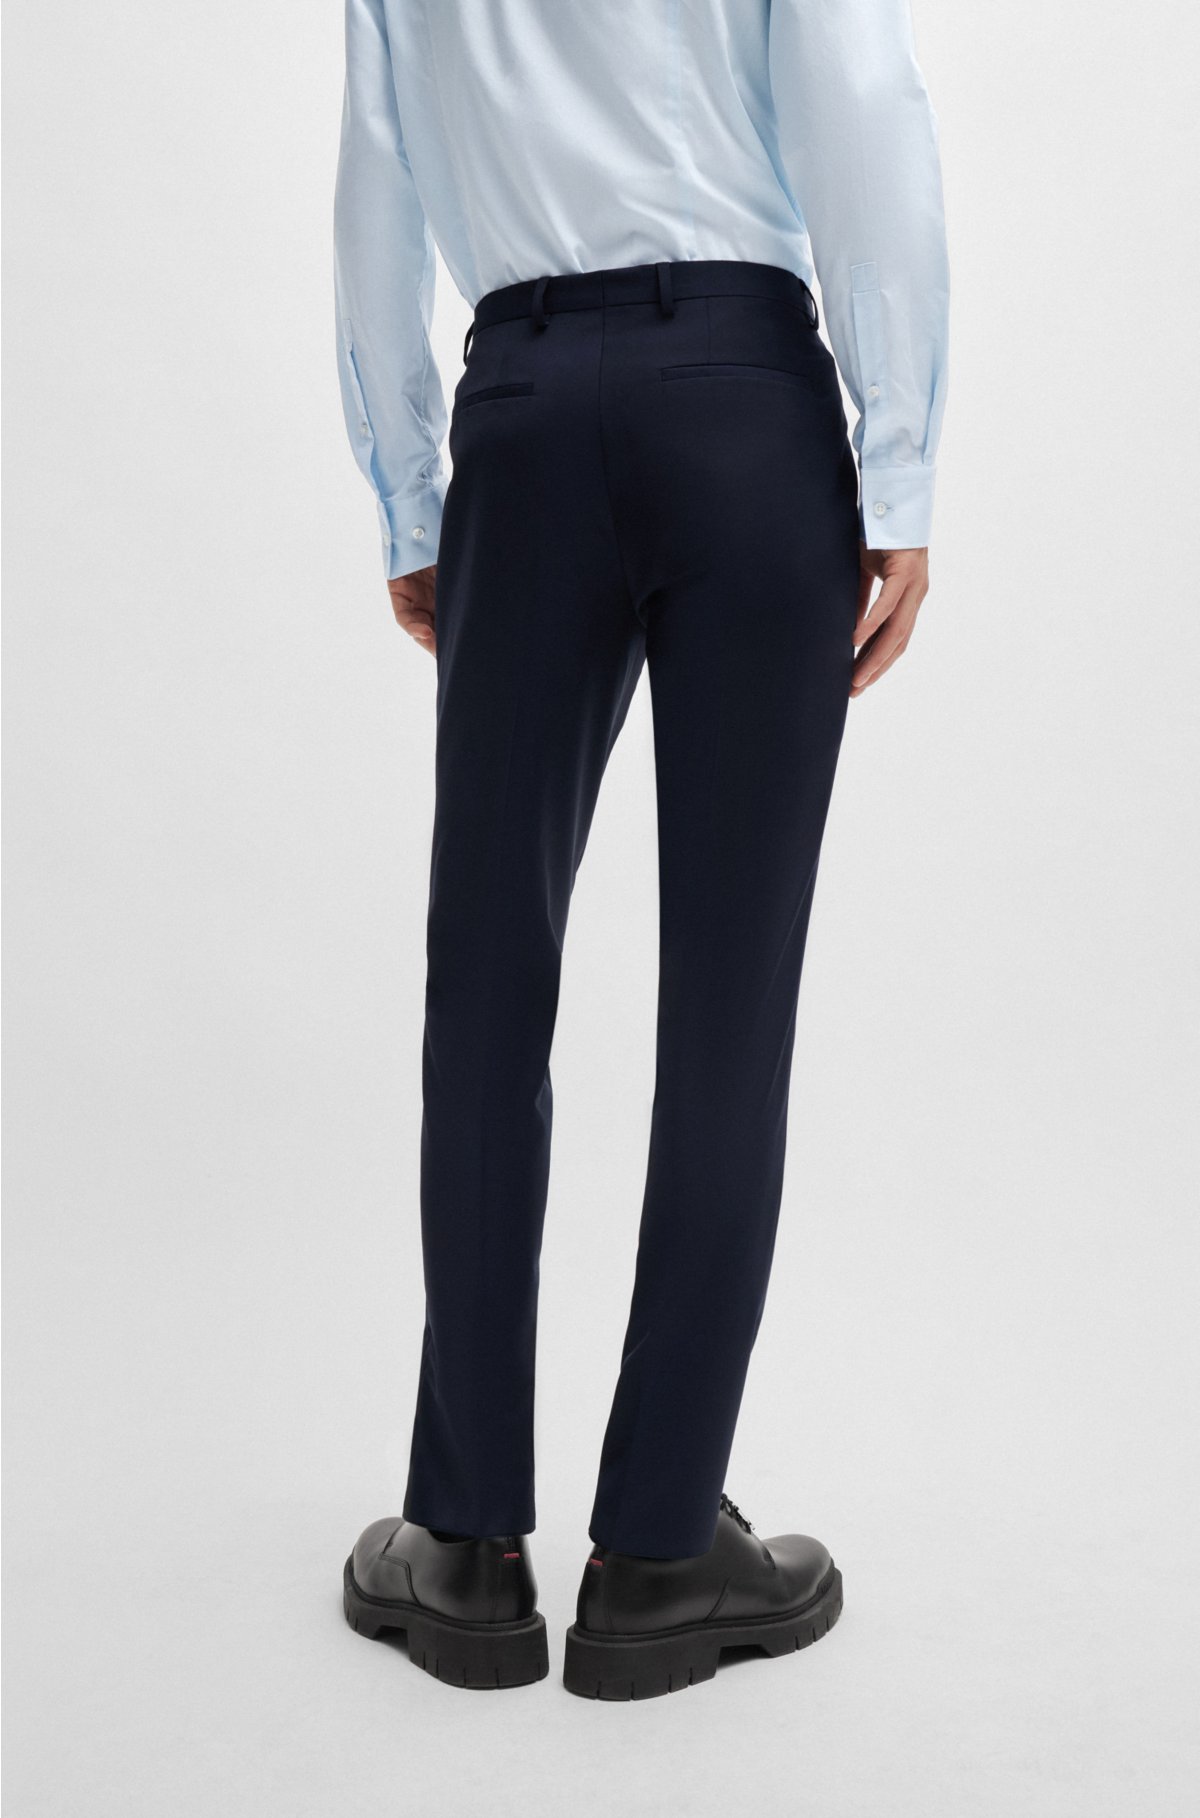 Men Formal Pants at Rs 450/piece